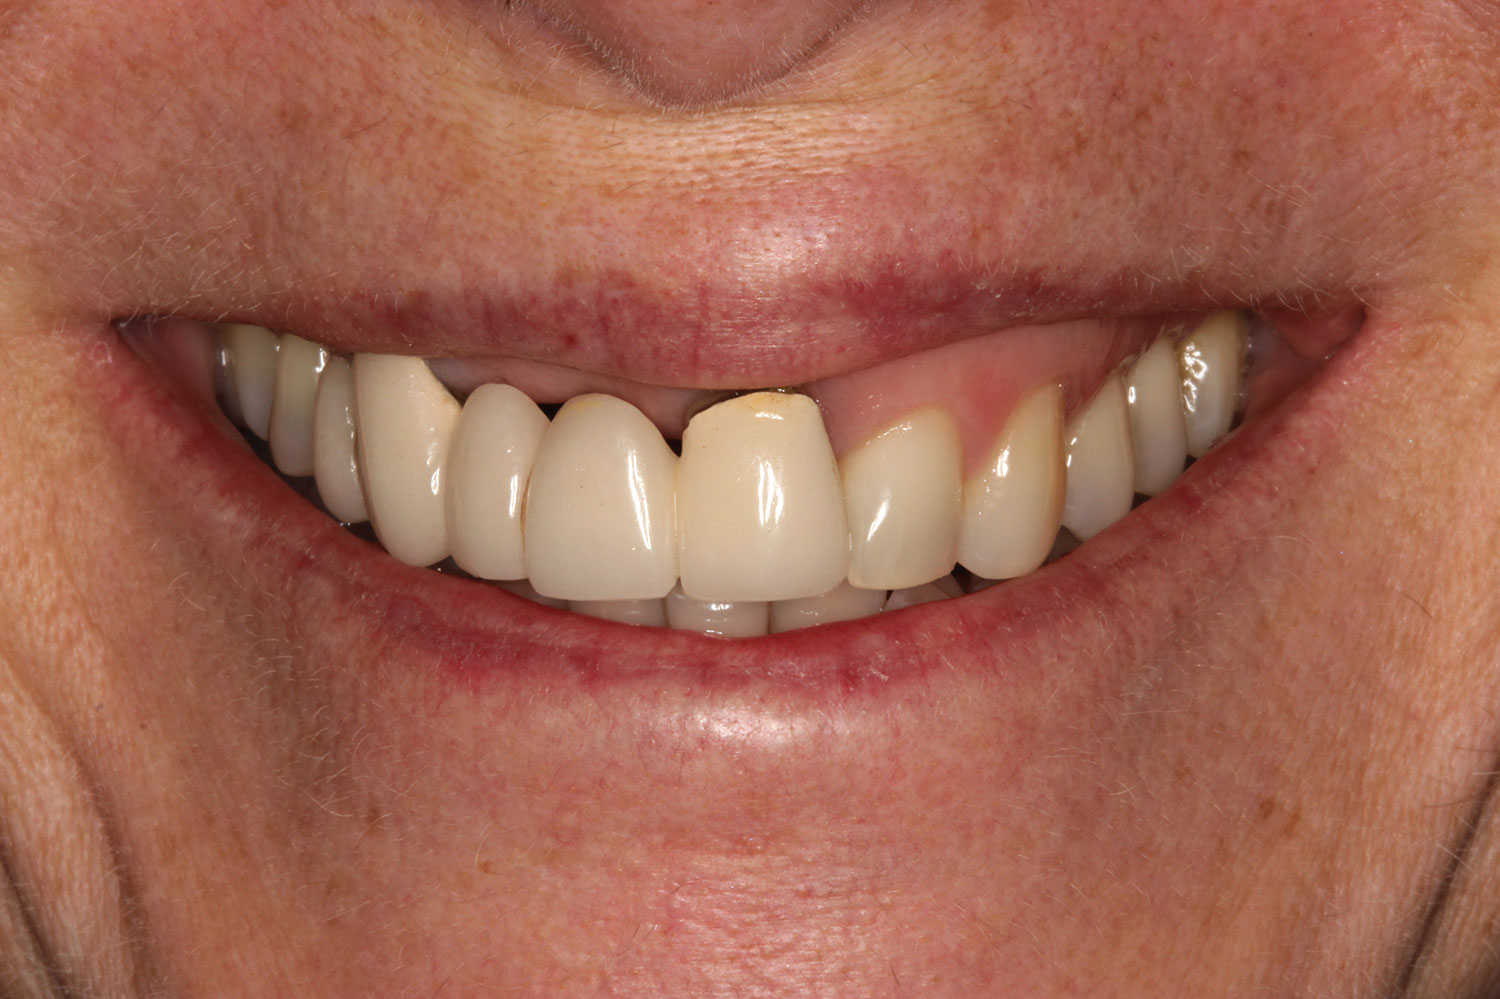 Before applying orthodontics and restoration